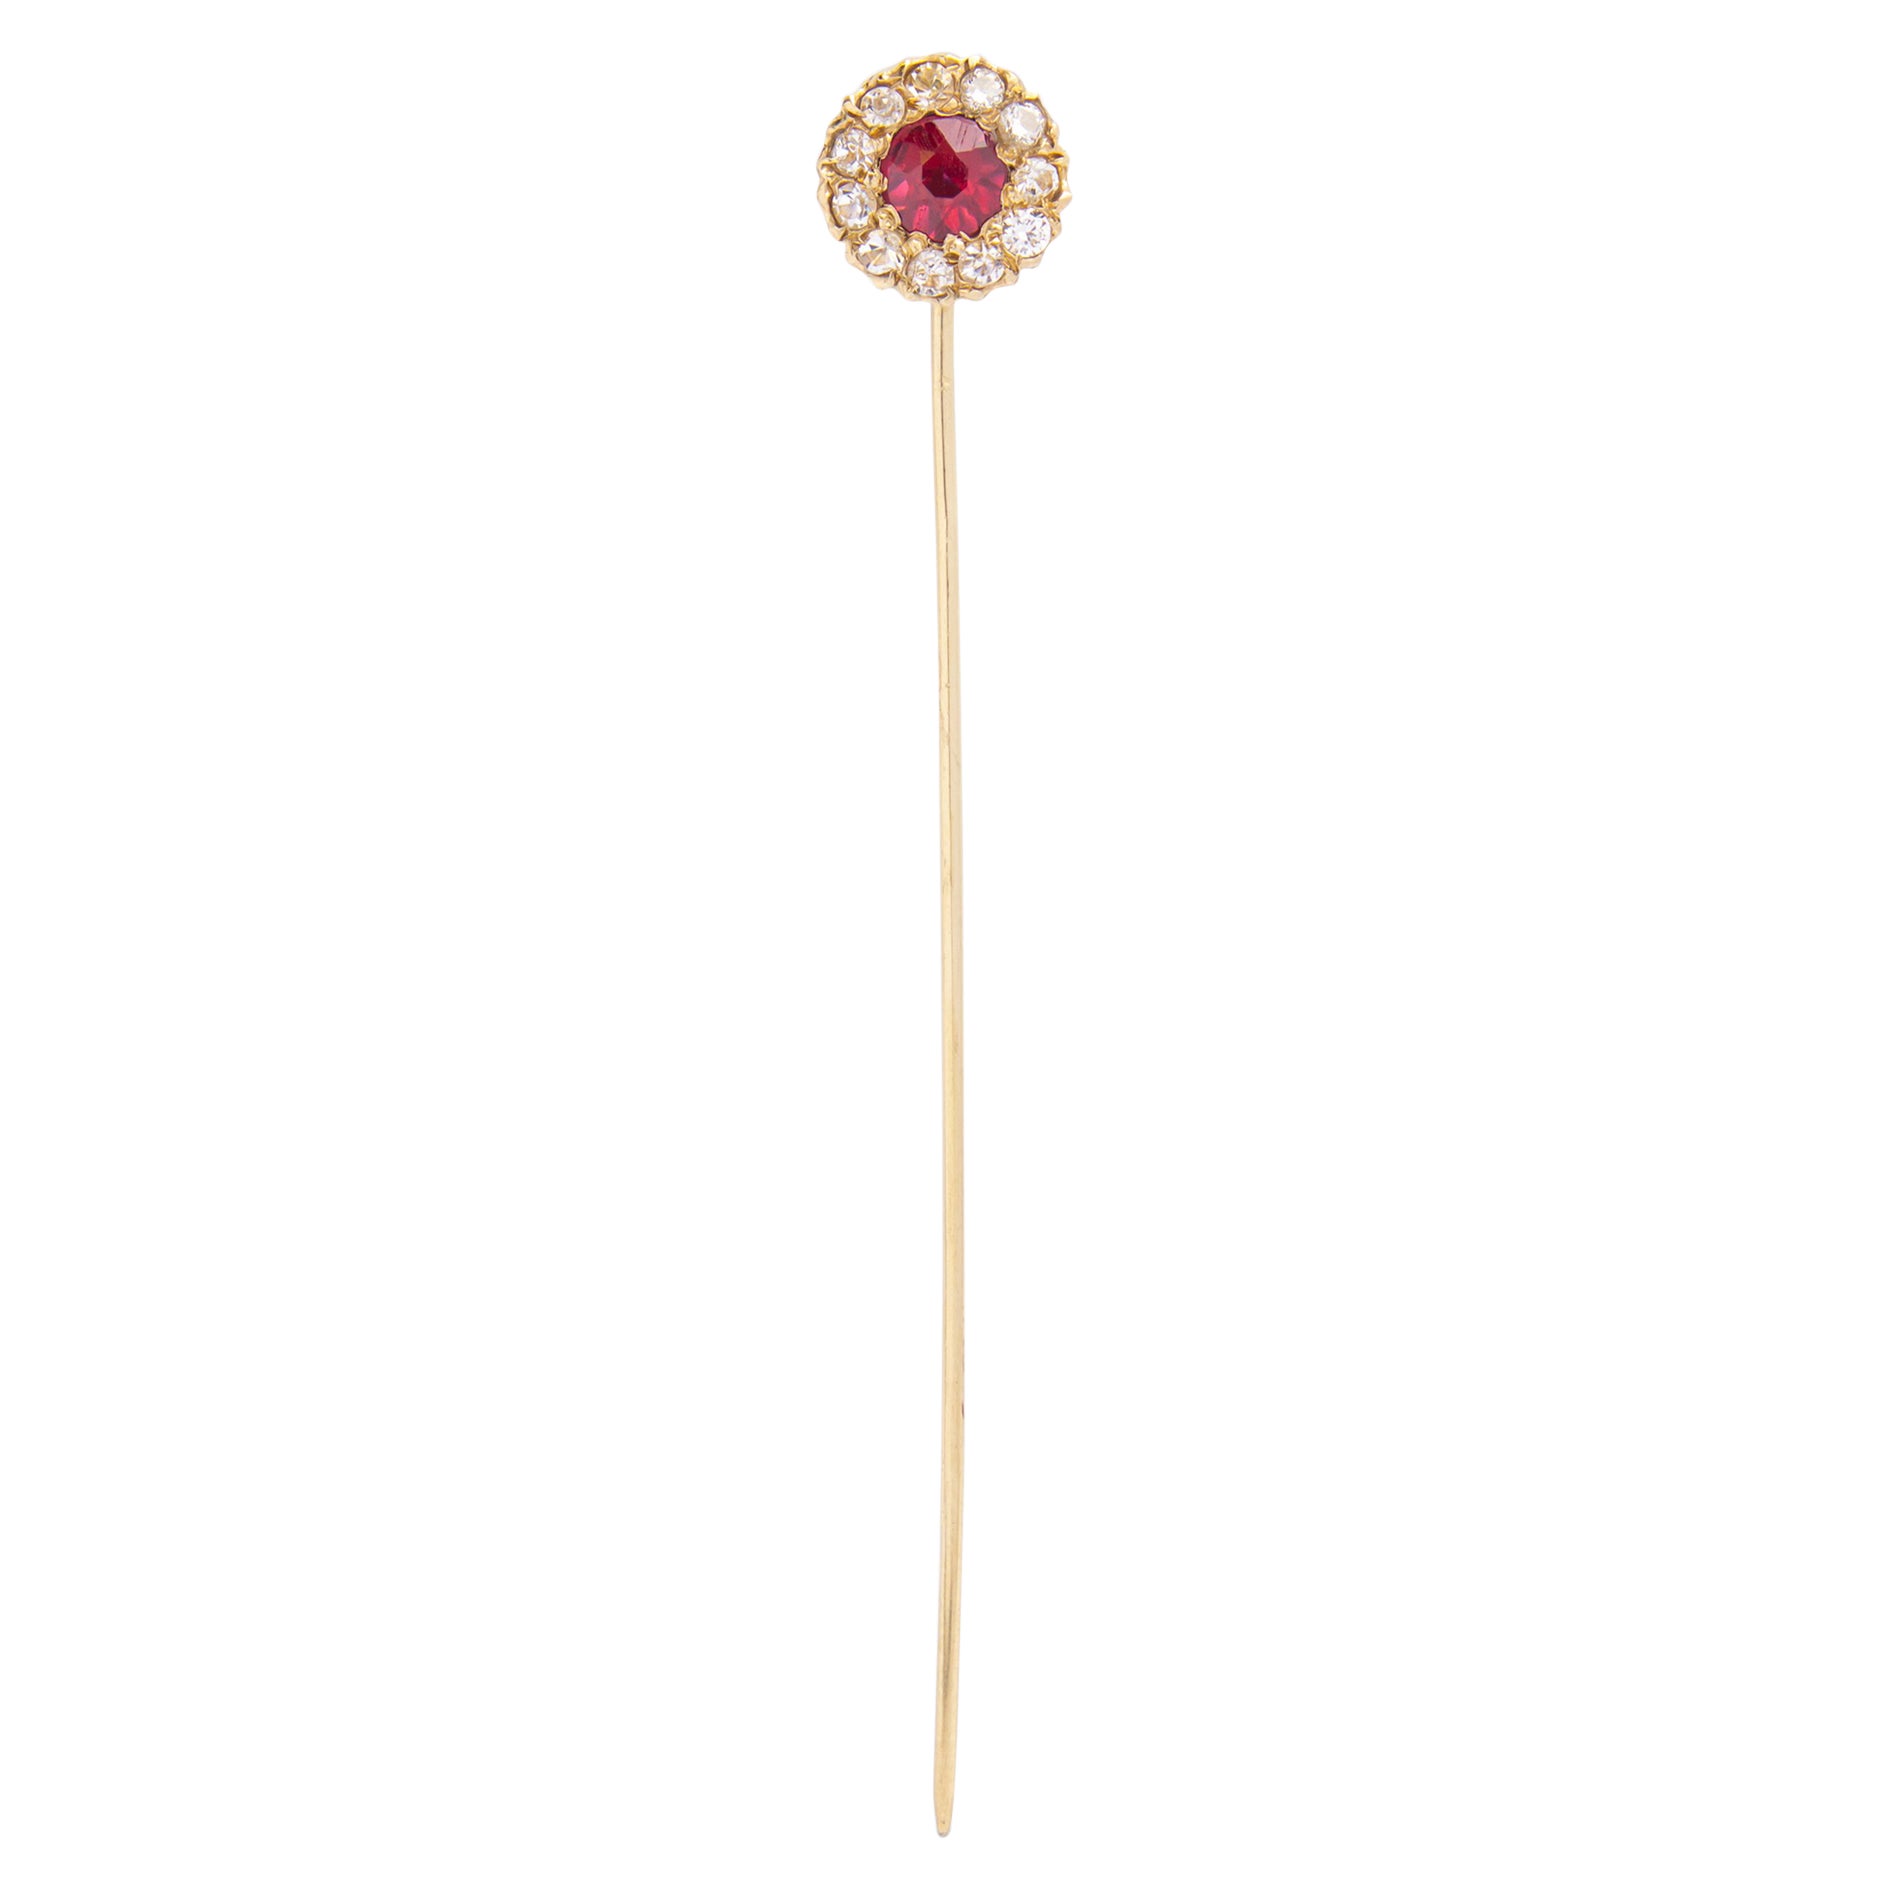 10 Karat Gold, Ruby & Diamond Stick Pin